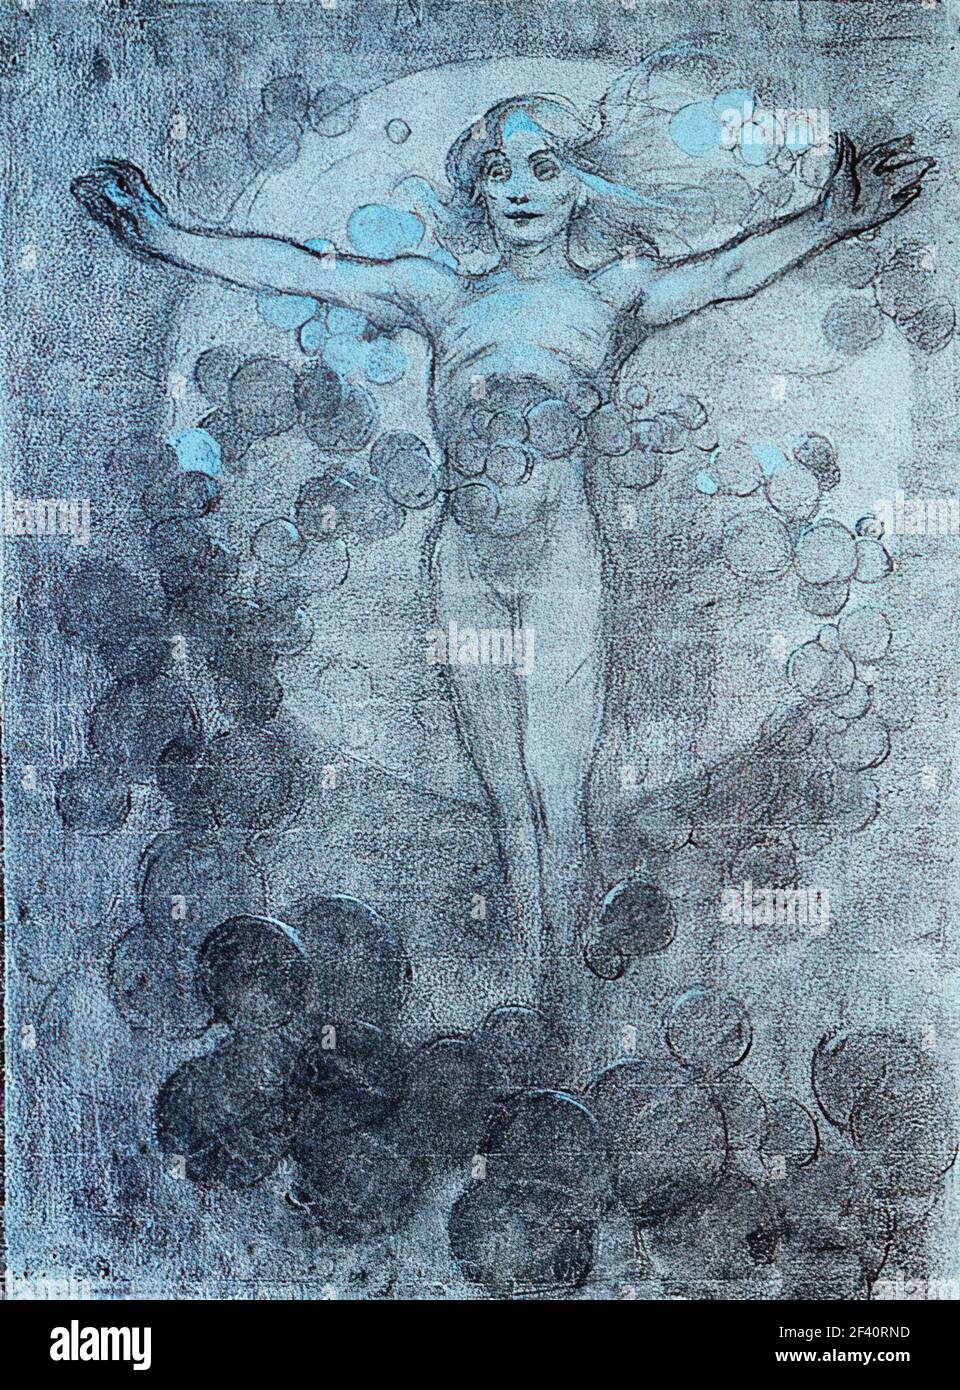 Alfons Mucha - Figura in piedi C 1900 Foto Stock